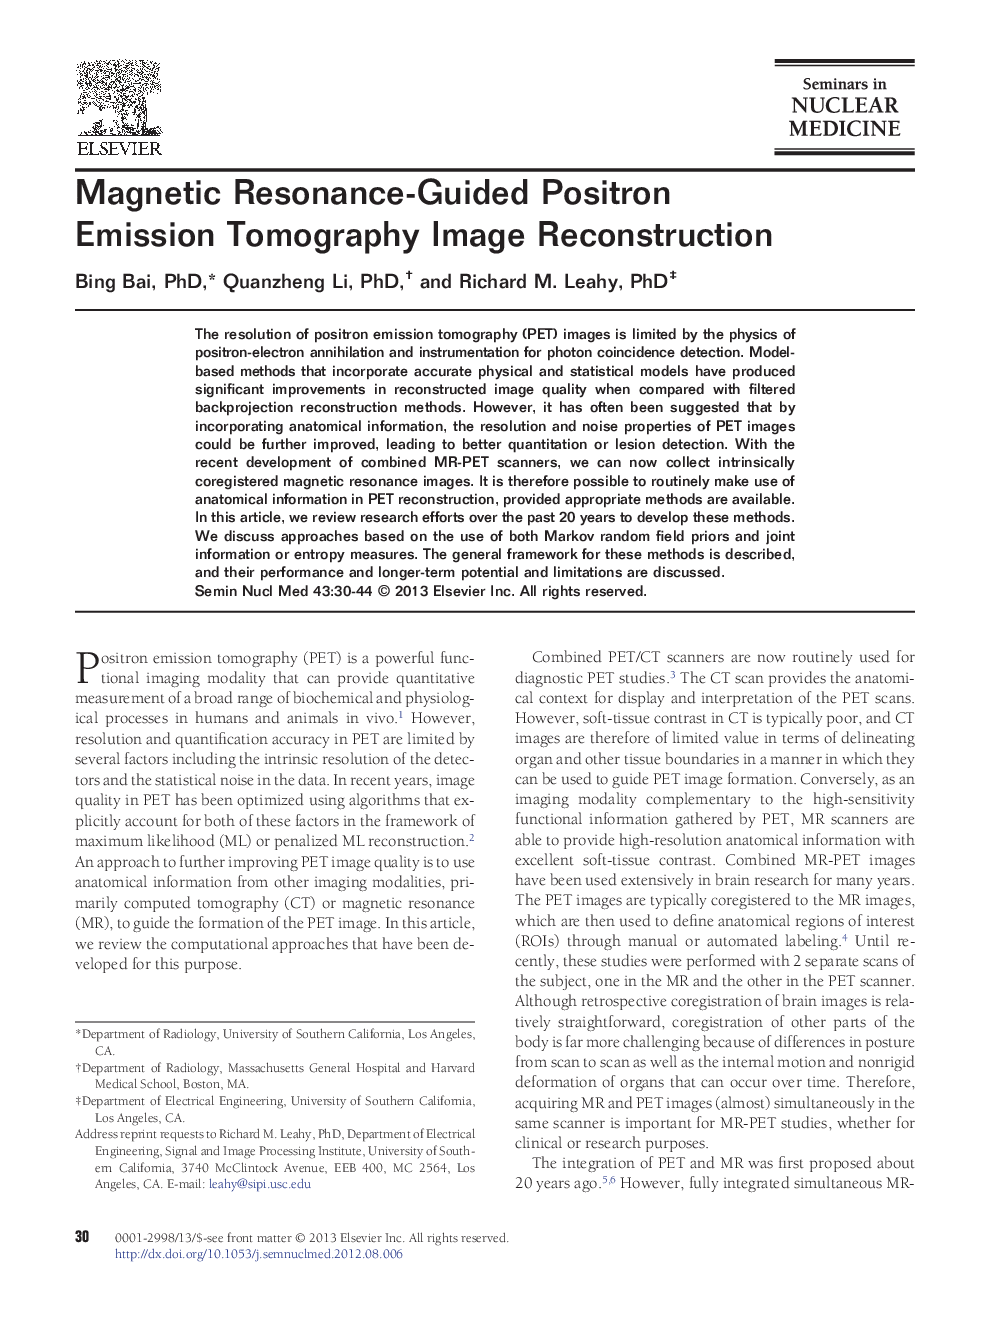 Magnetic Resonance-Guided Positron Emission Tomography Image Reconstruction